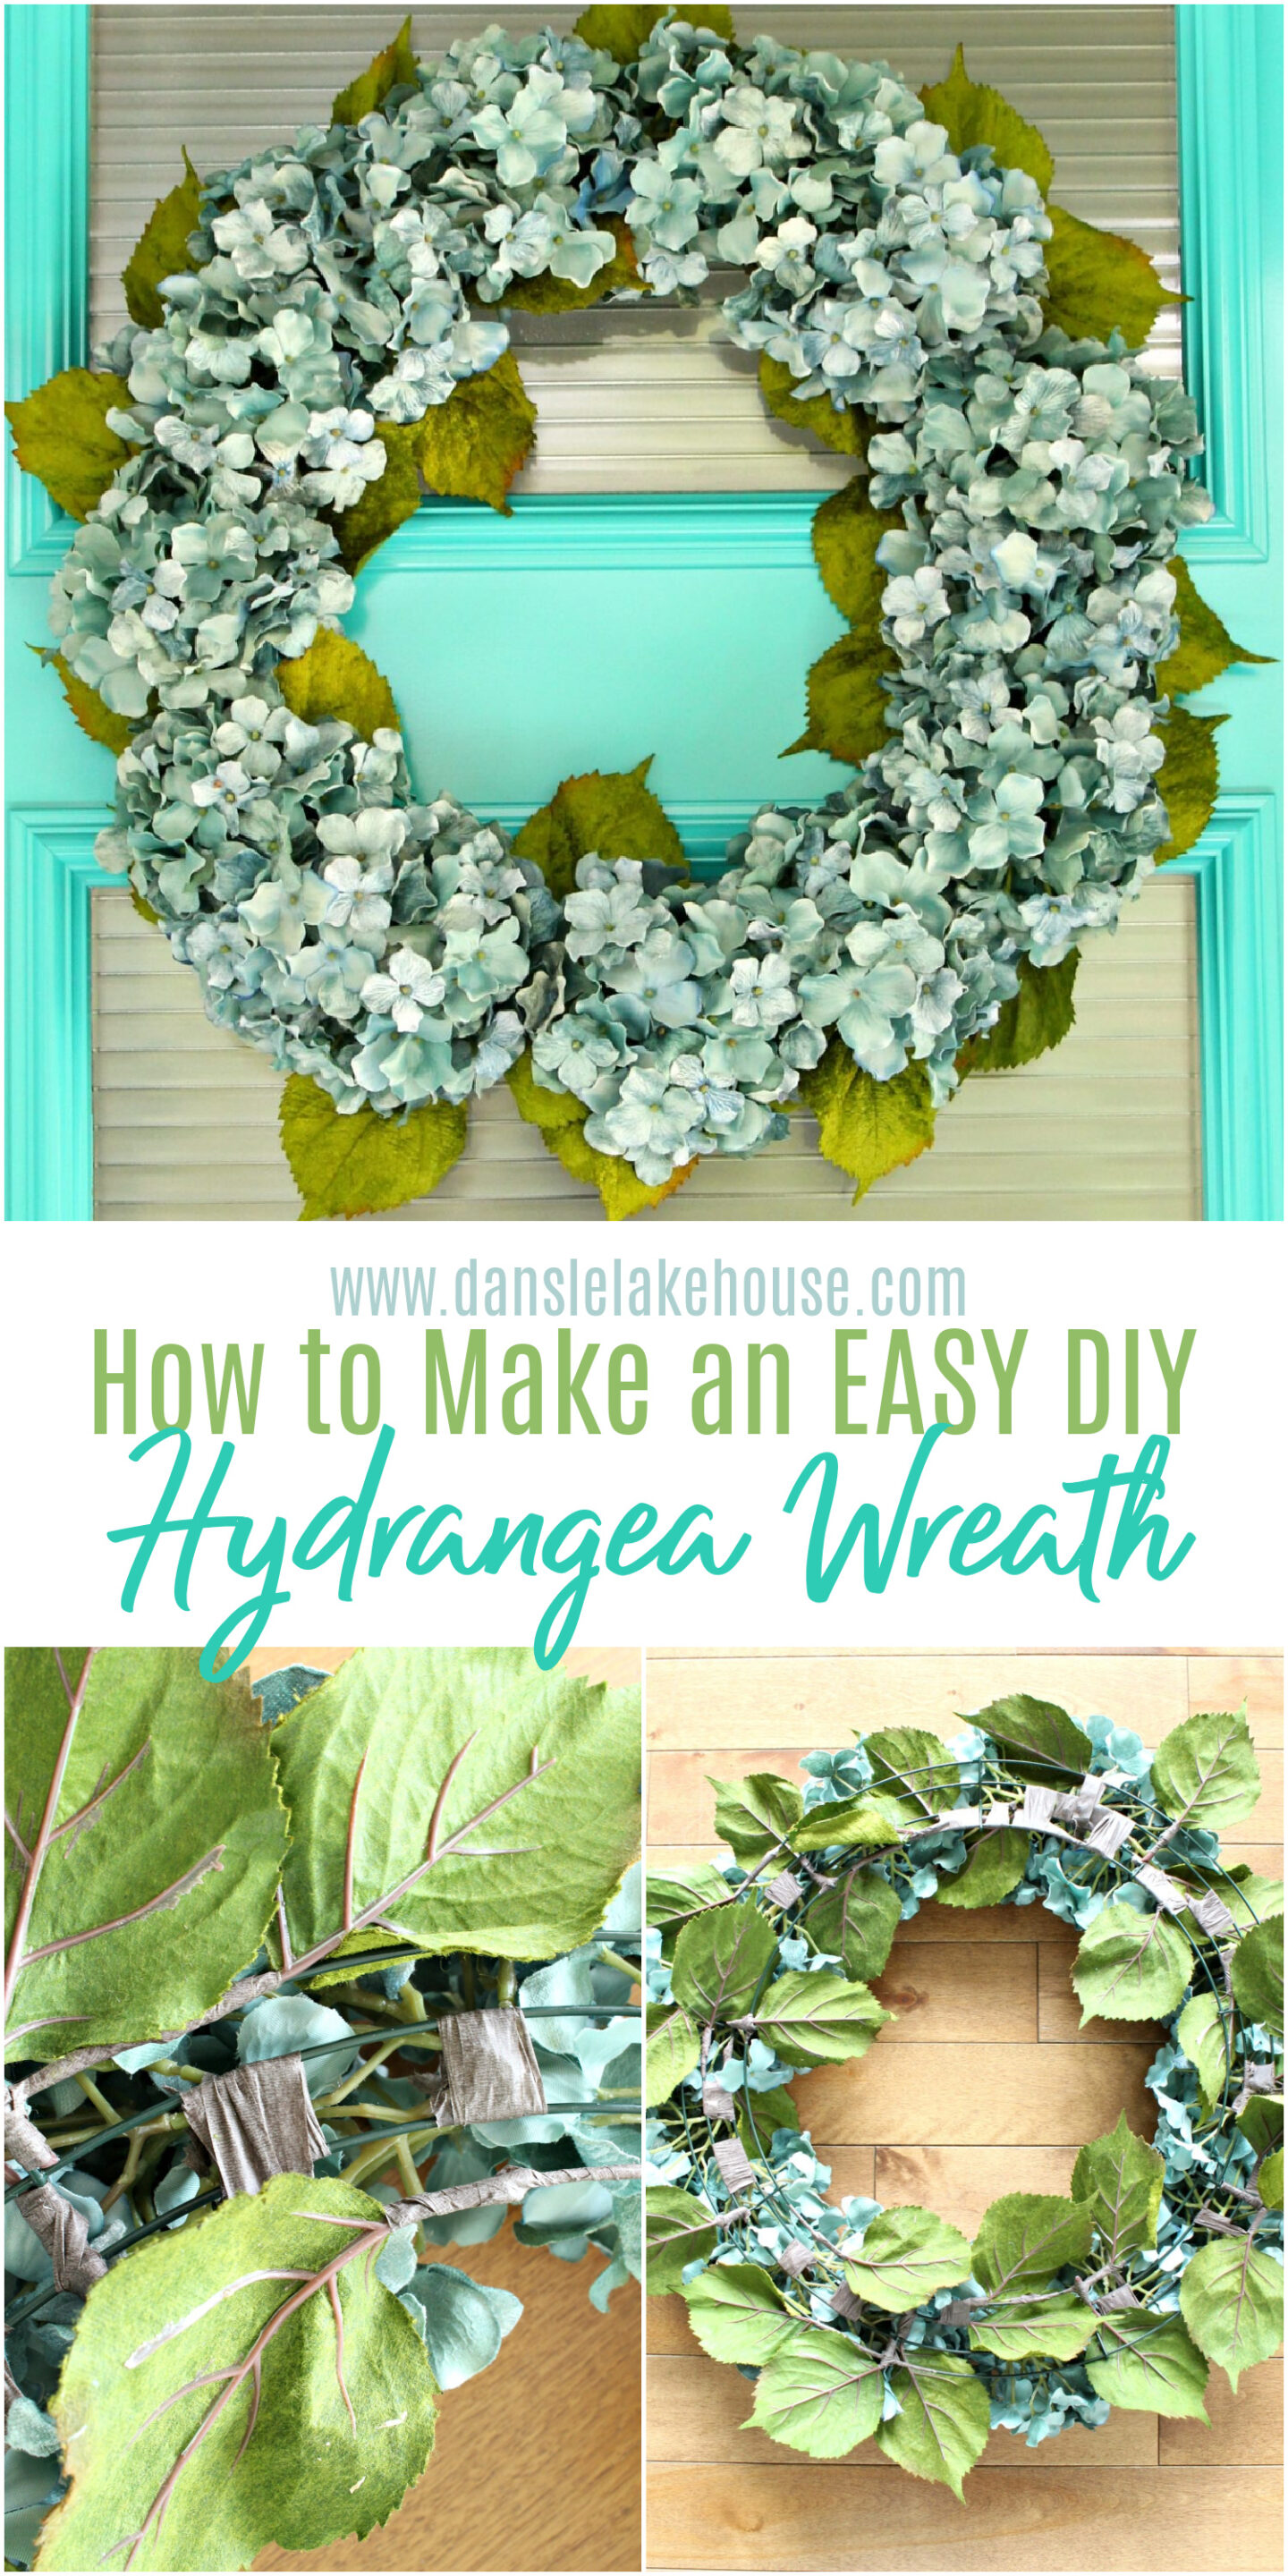 How to Make an Easy Hydrangea Wreath